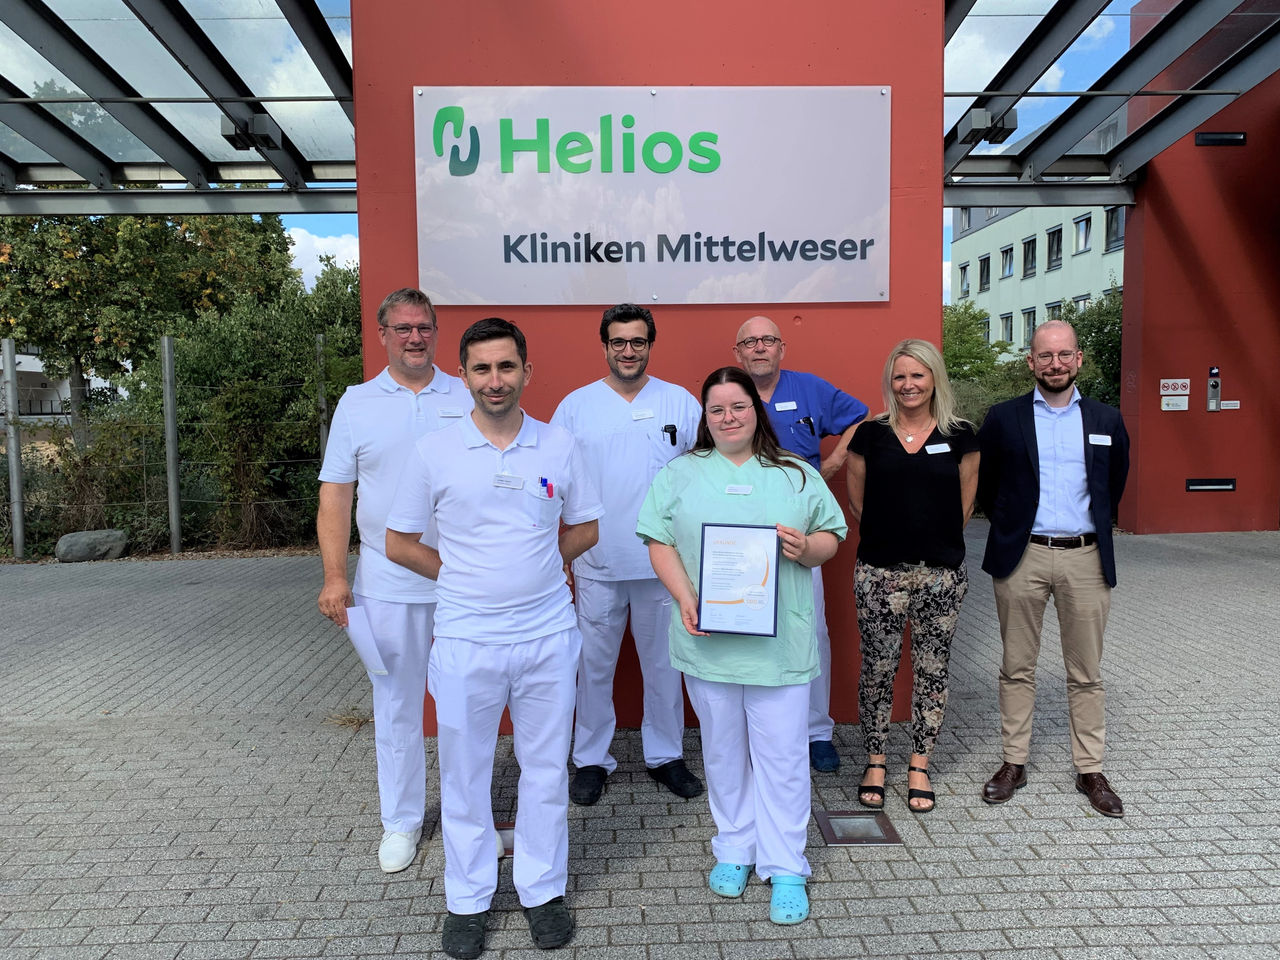 Helios Kliniken Mittelweser als Diabeteszentrum DDG zertifiziert